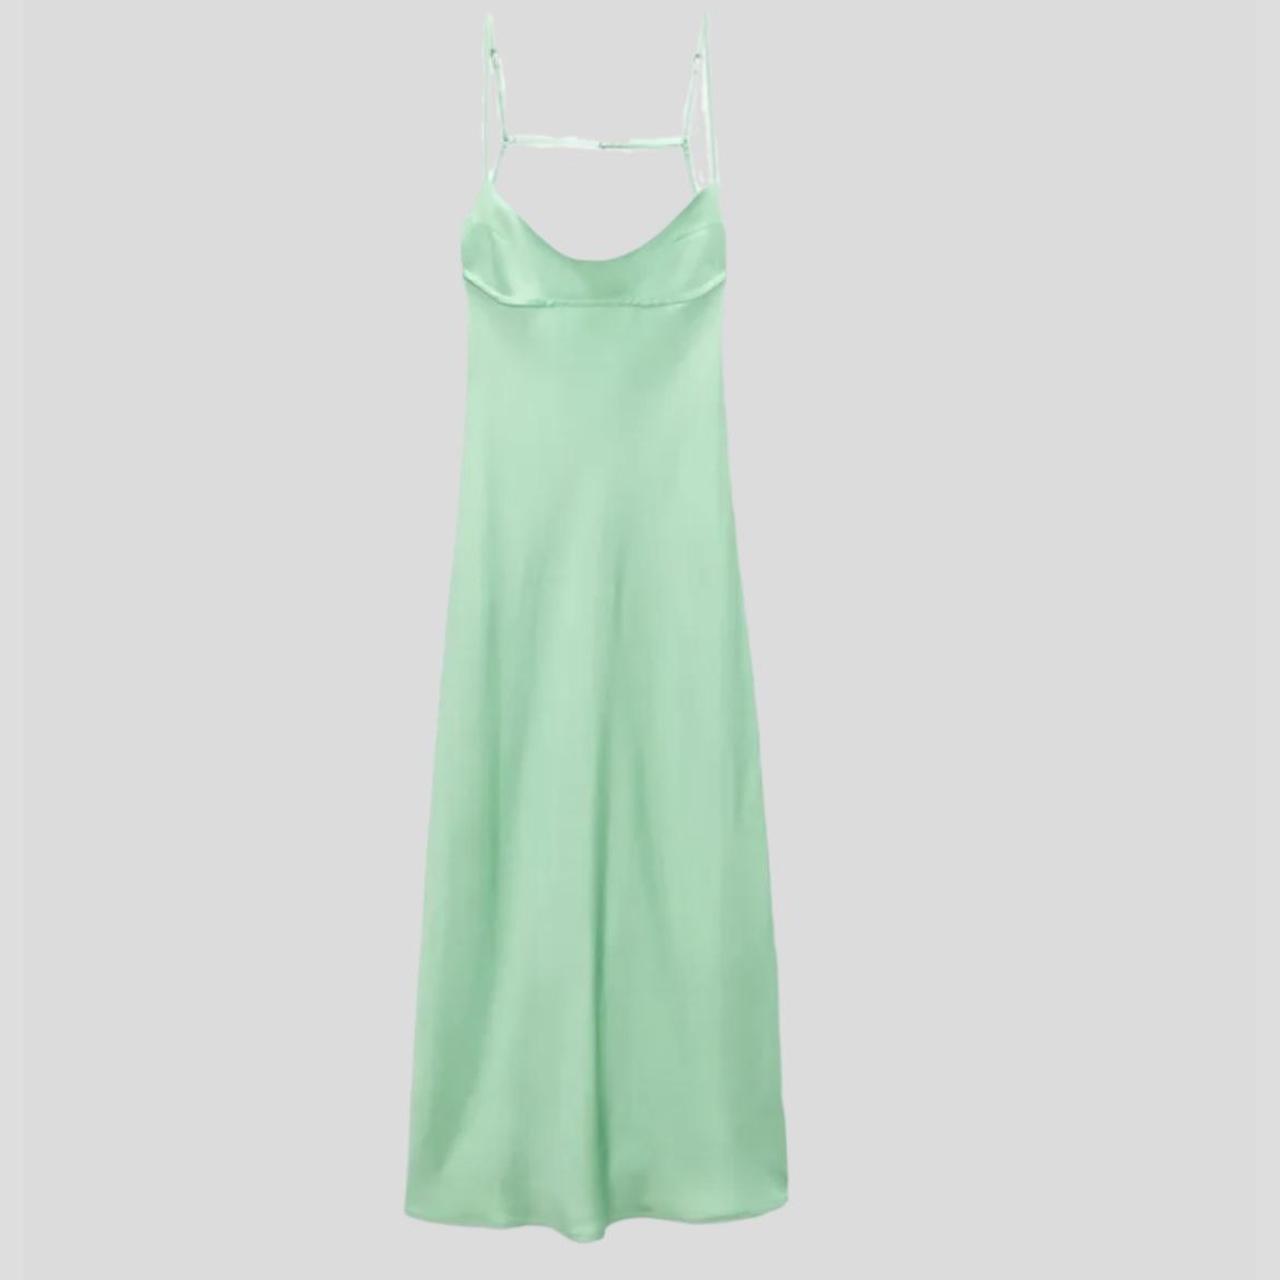 Zara Green Satin Midi Dress Sizes available: ️M... - Depop